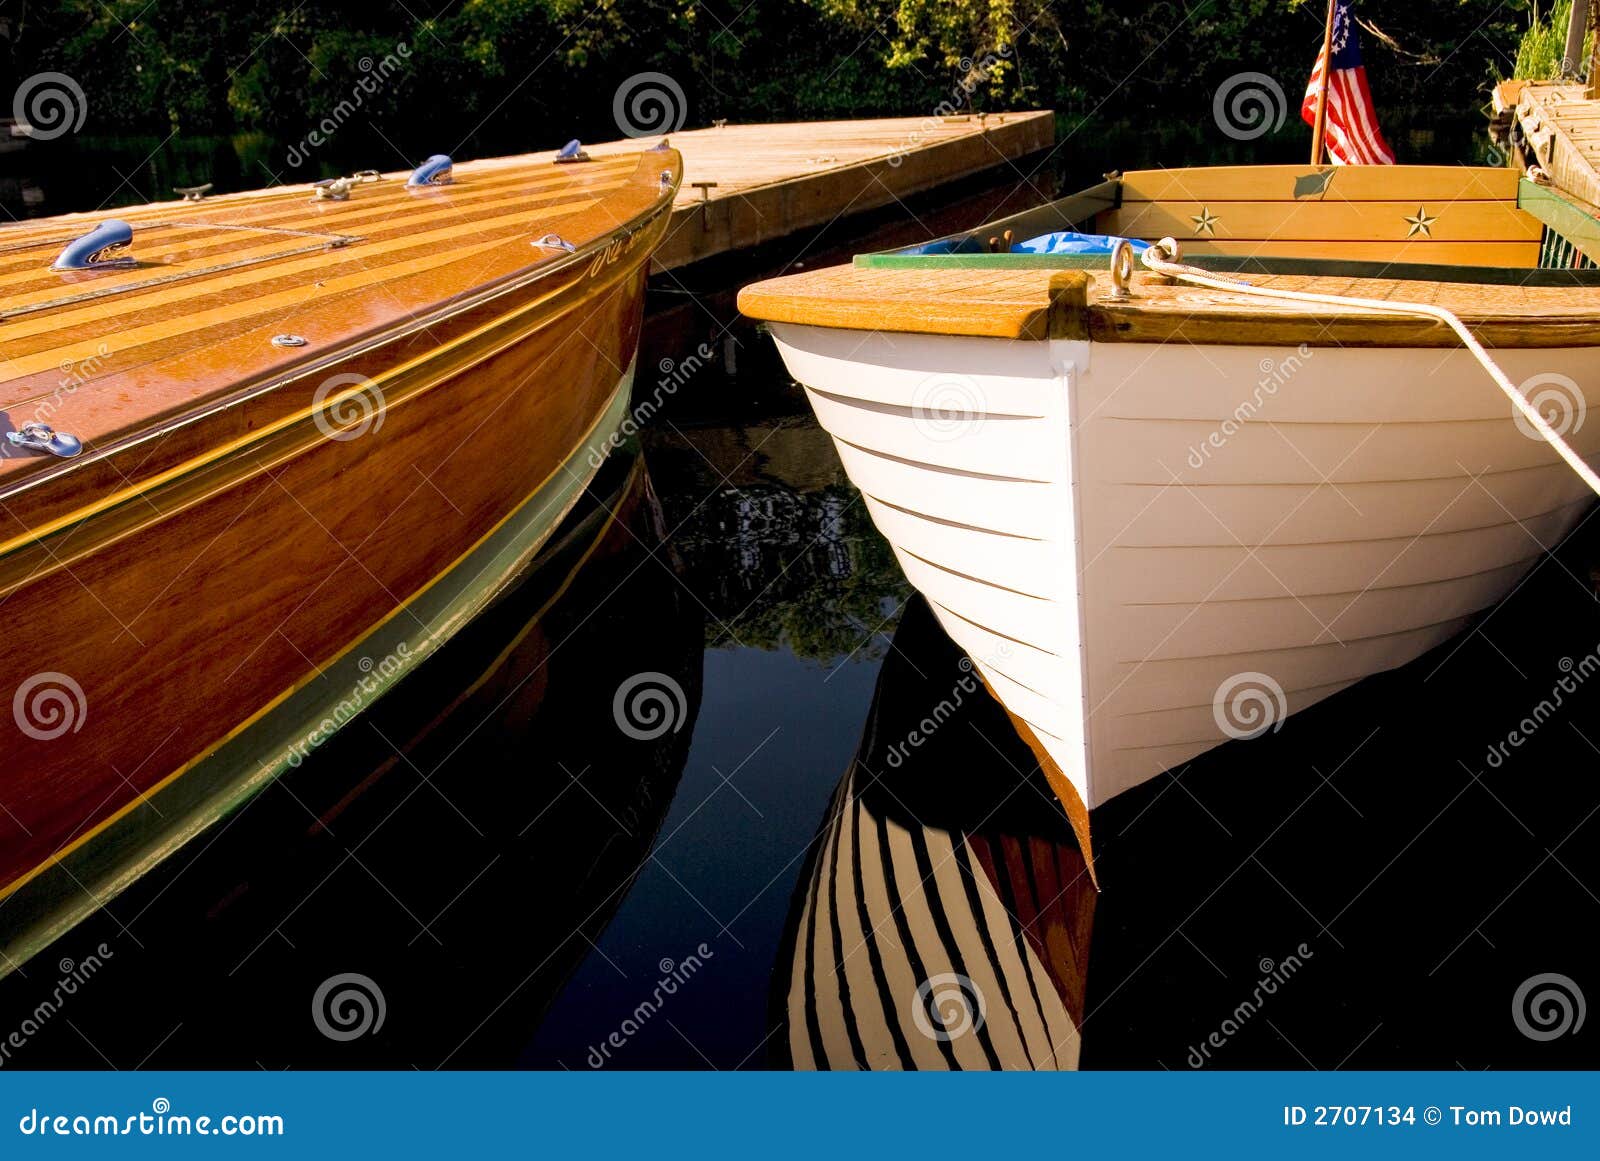 classic wood boats docked